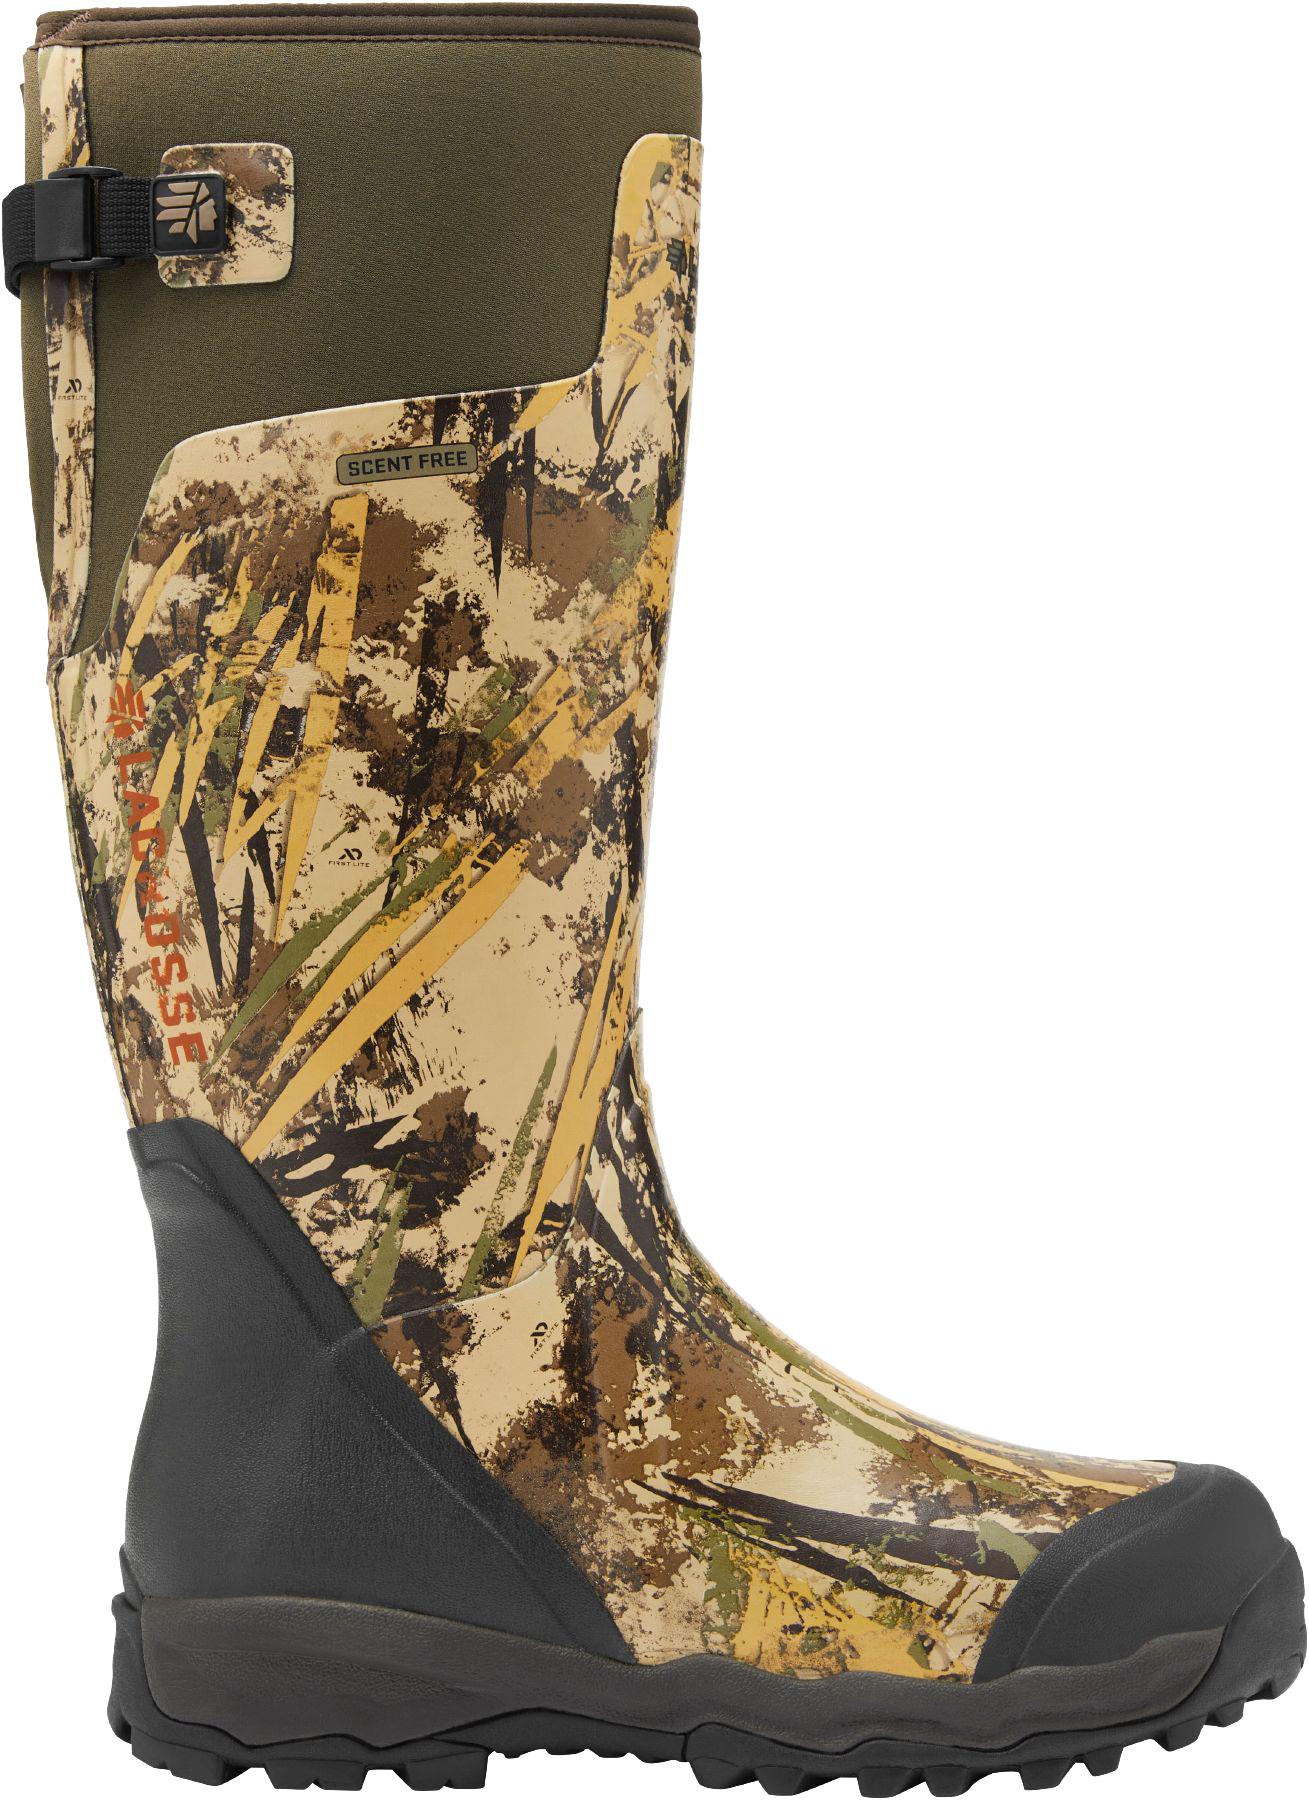 LaCrosse AlphaBurly Pro Hunting Boots for Men